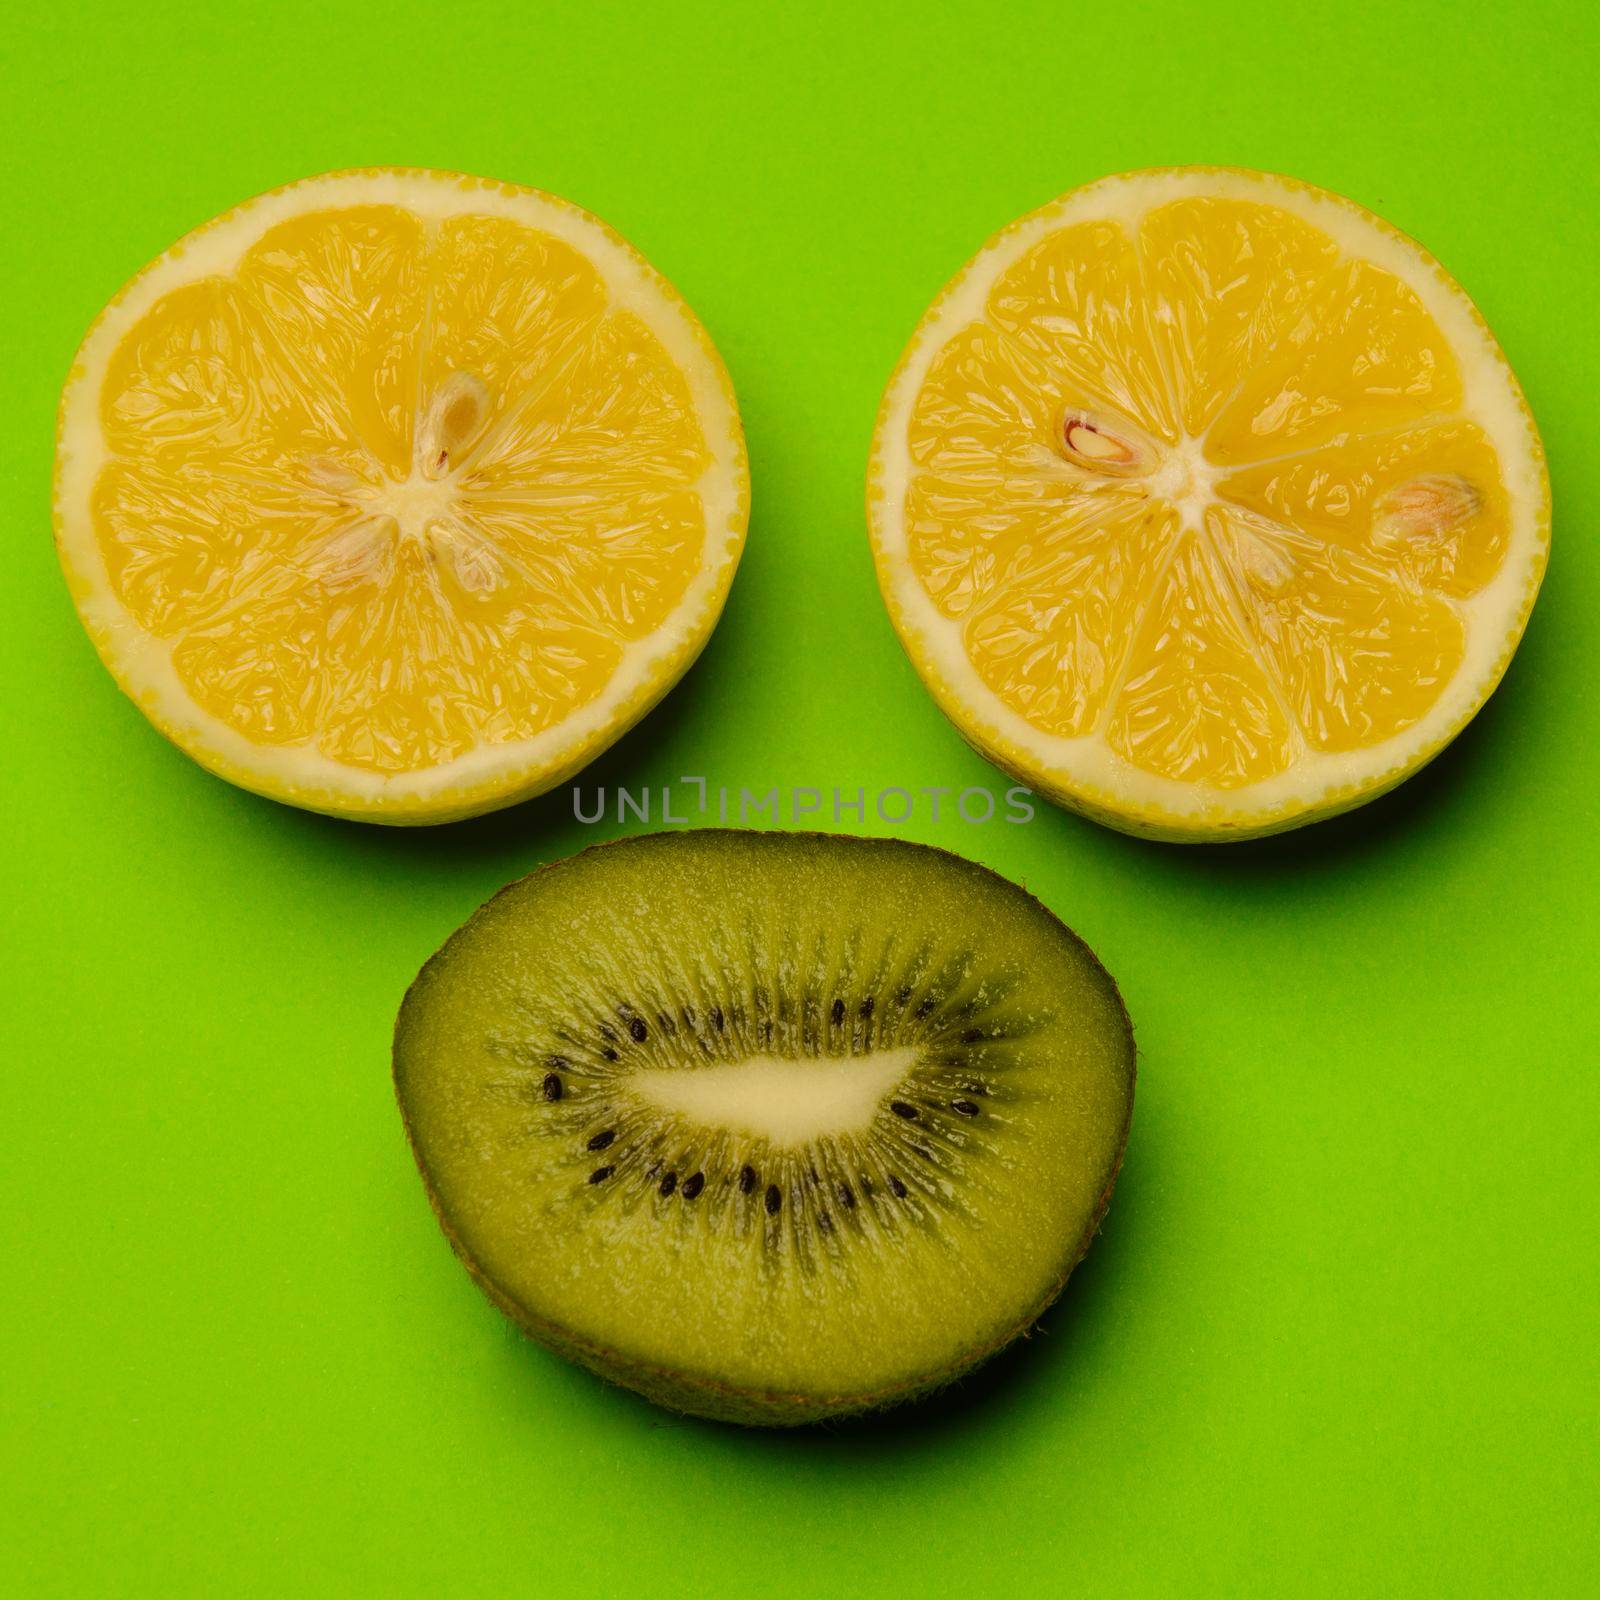 Smiley from the kiwi and lemon on a colored background. Fresh kiwis and lemon fruit, interesting fruit composition